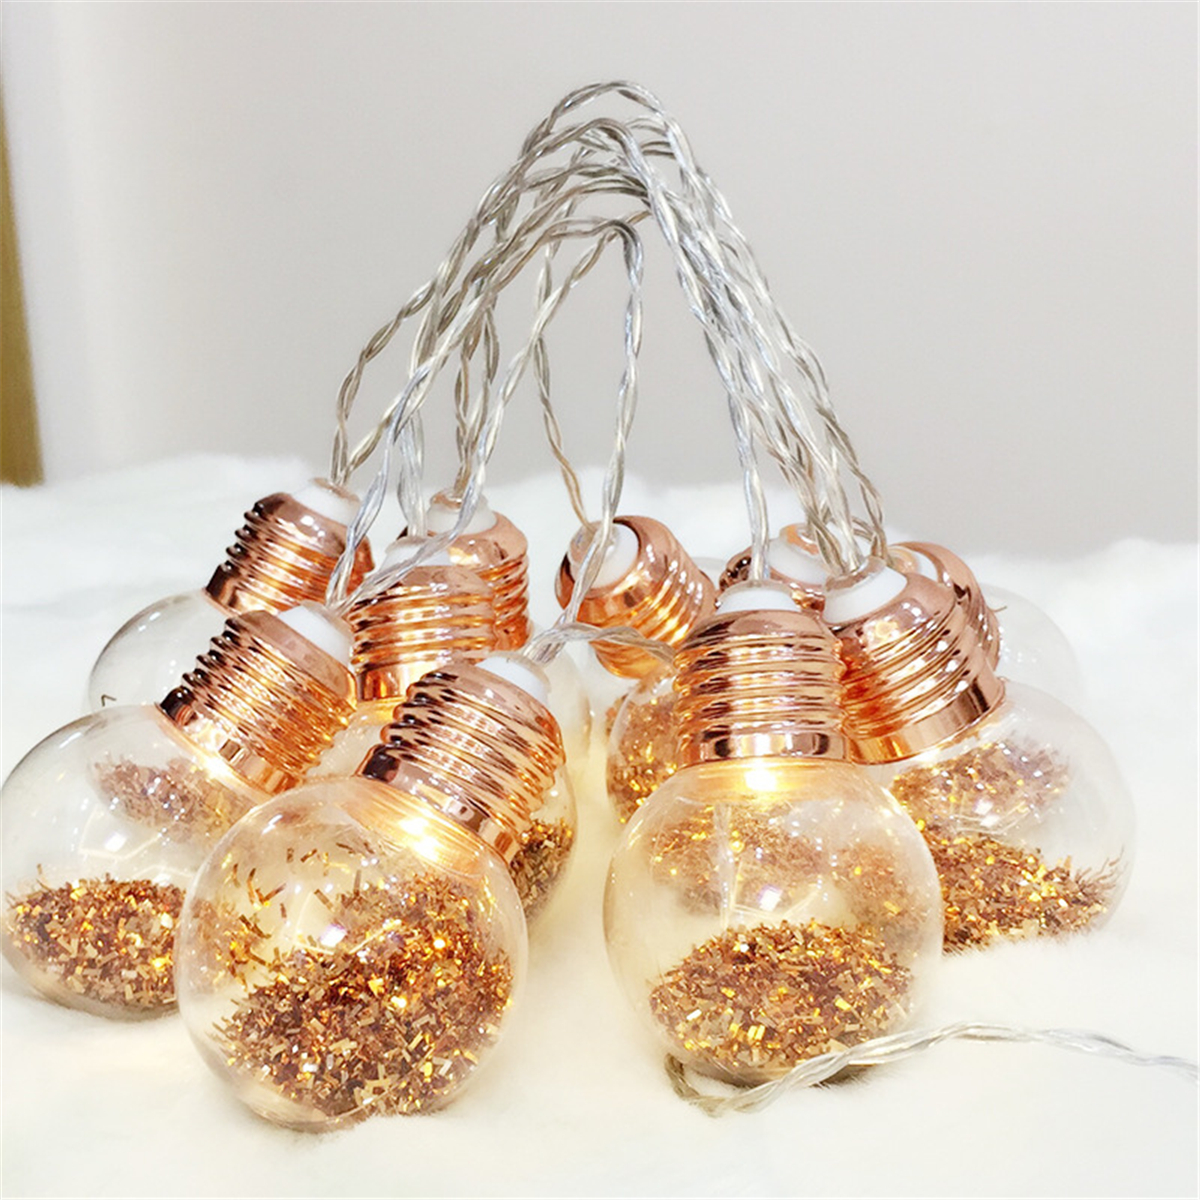 10-LED-Bulbs-String-Lights-Fairy-Lamp-Patio-Party-Yard-Garden-Wedding-Home-Decorative-Night-Light-1538526-3